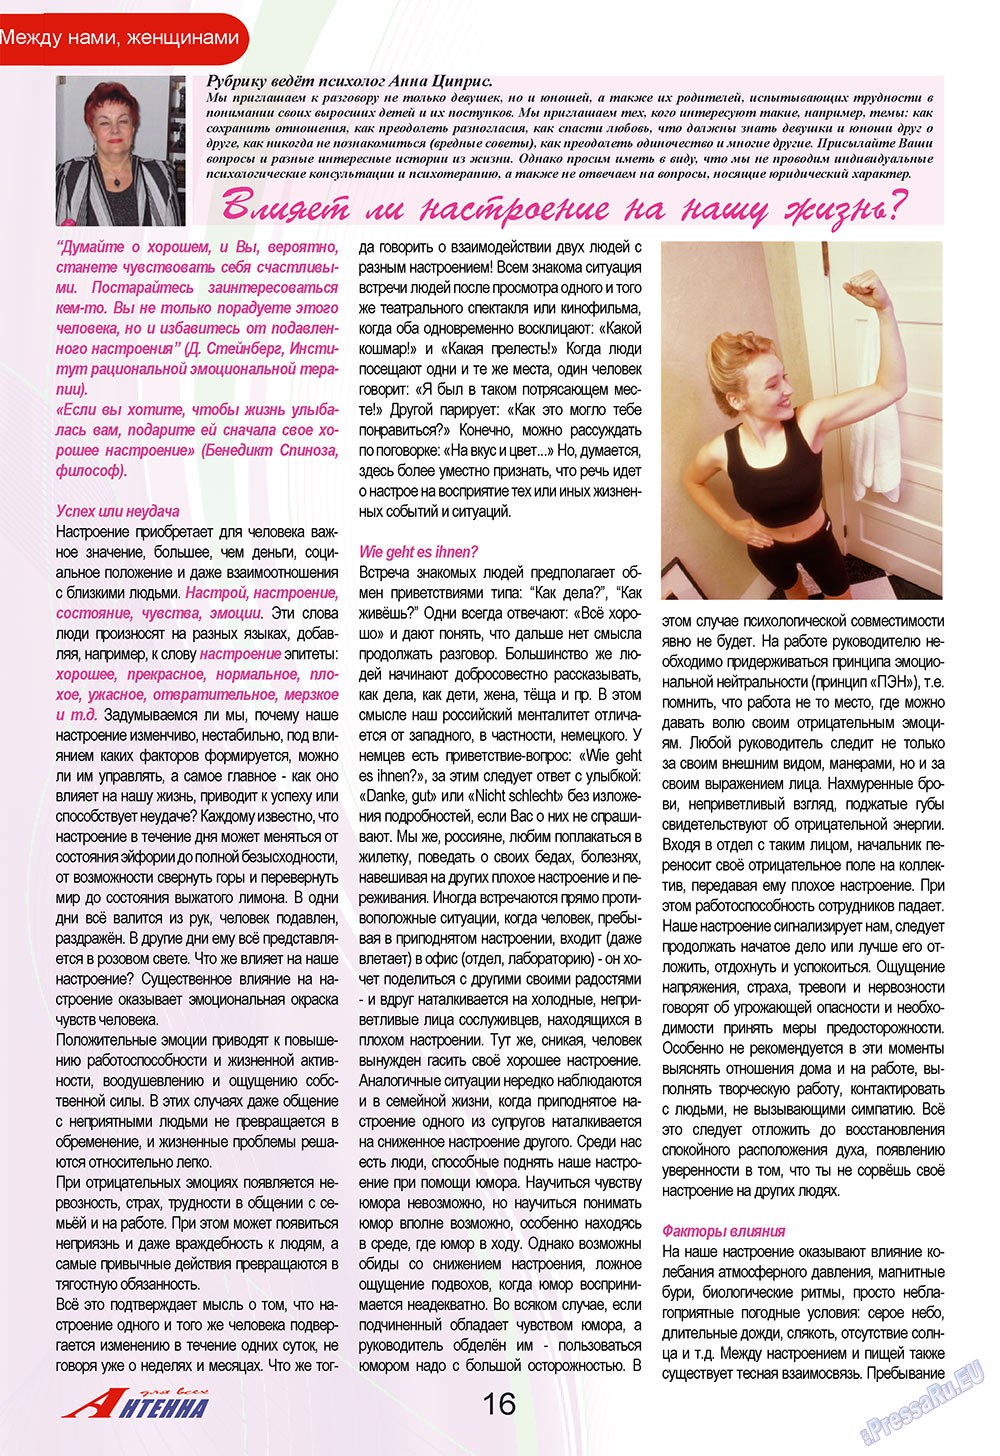 Антенна (журнал). 2009 год, номер 9, стр. 16